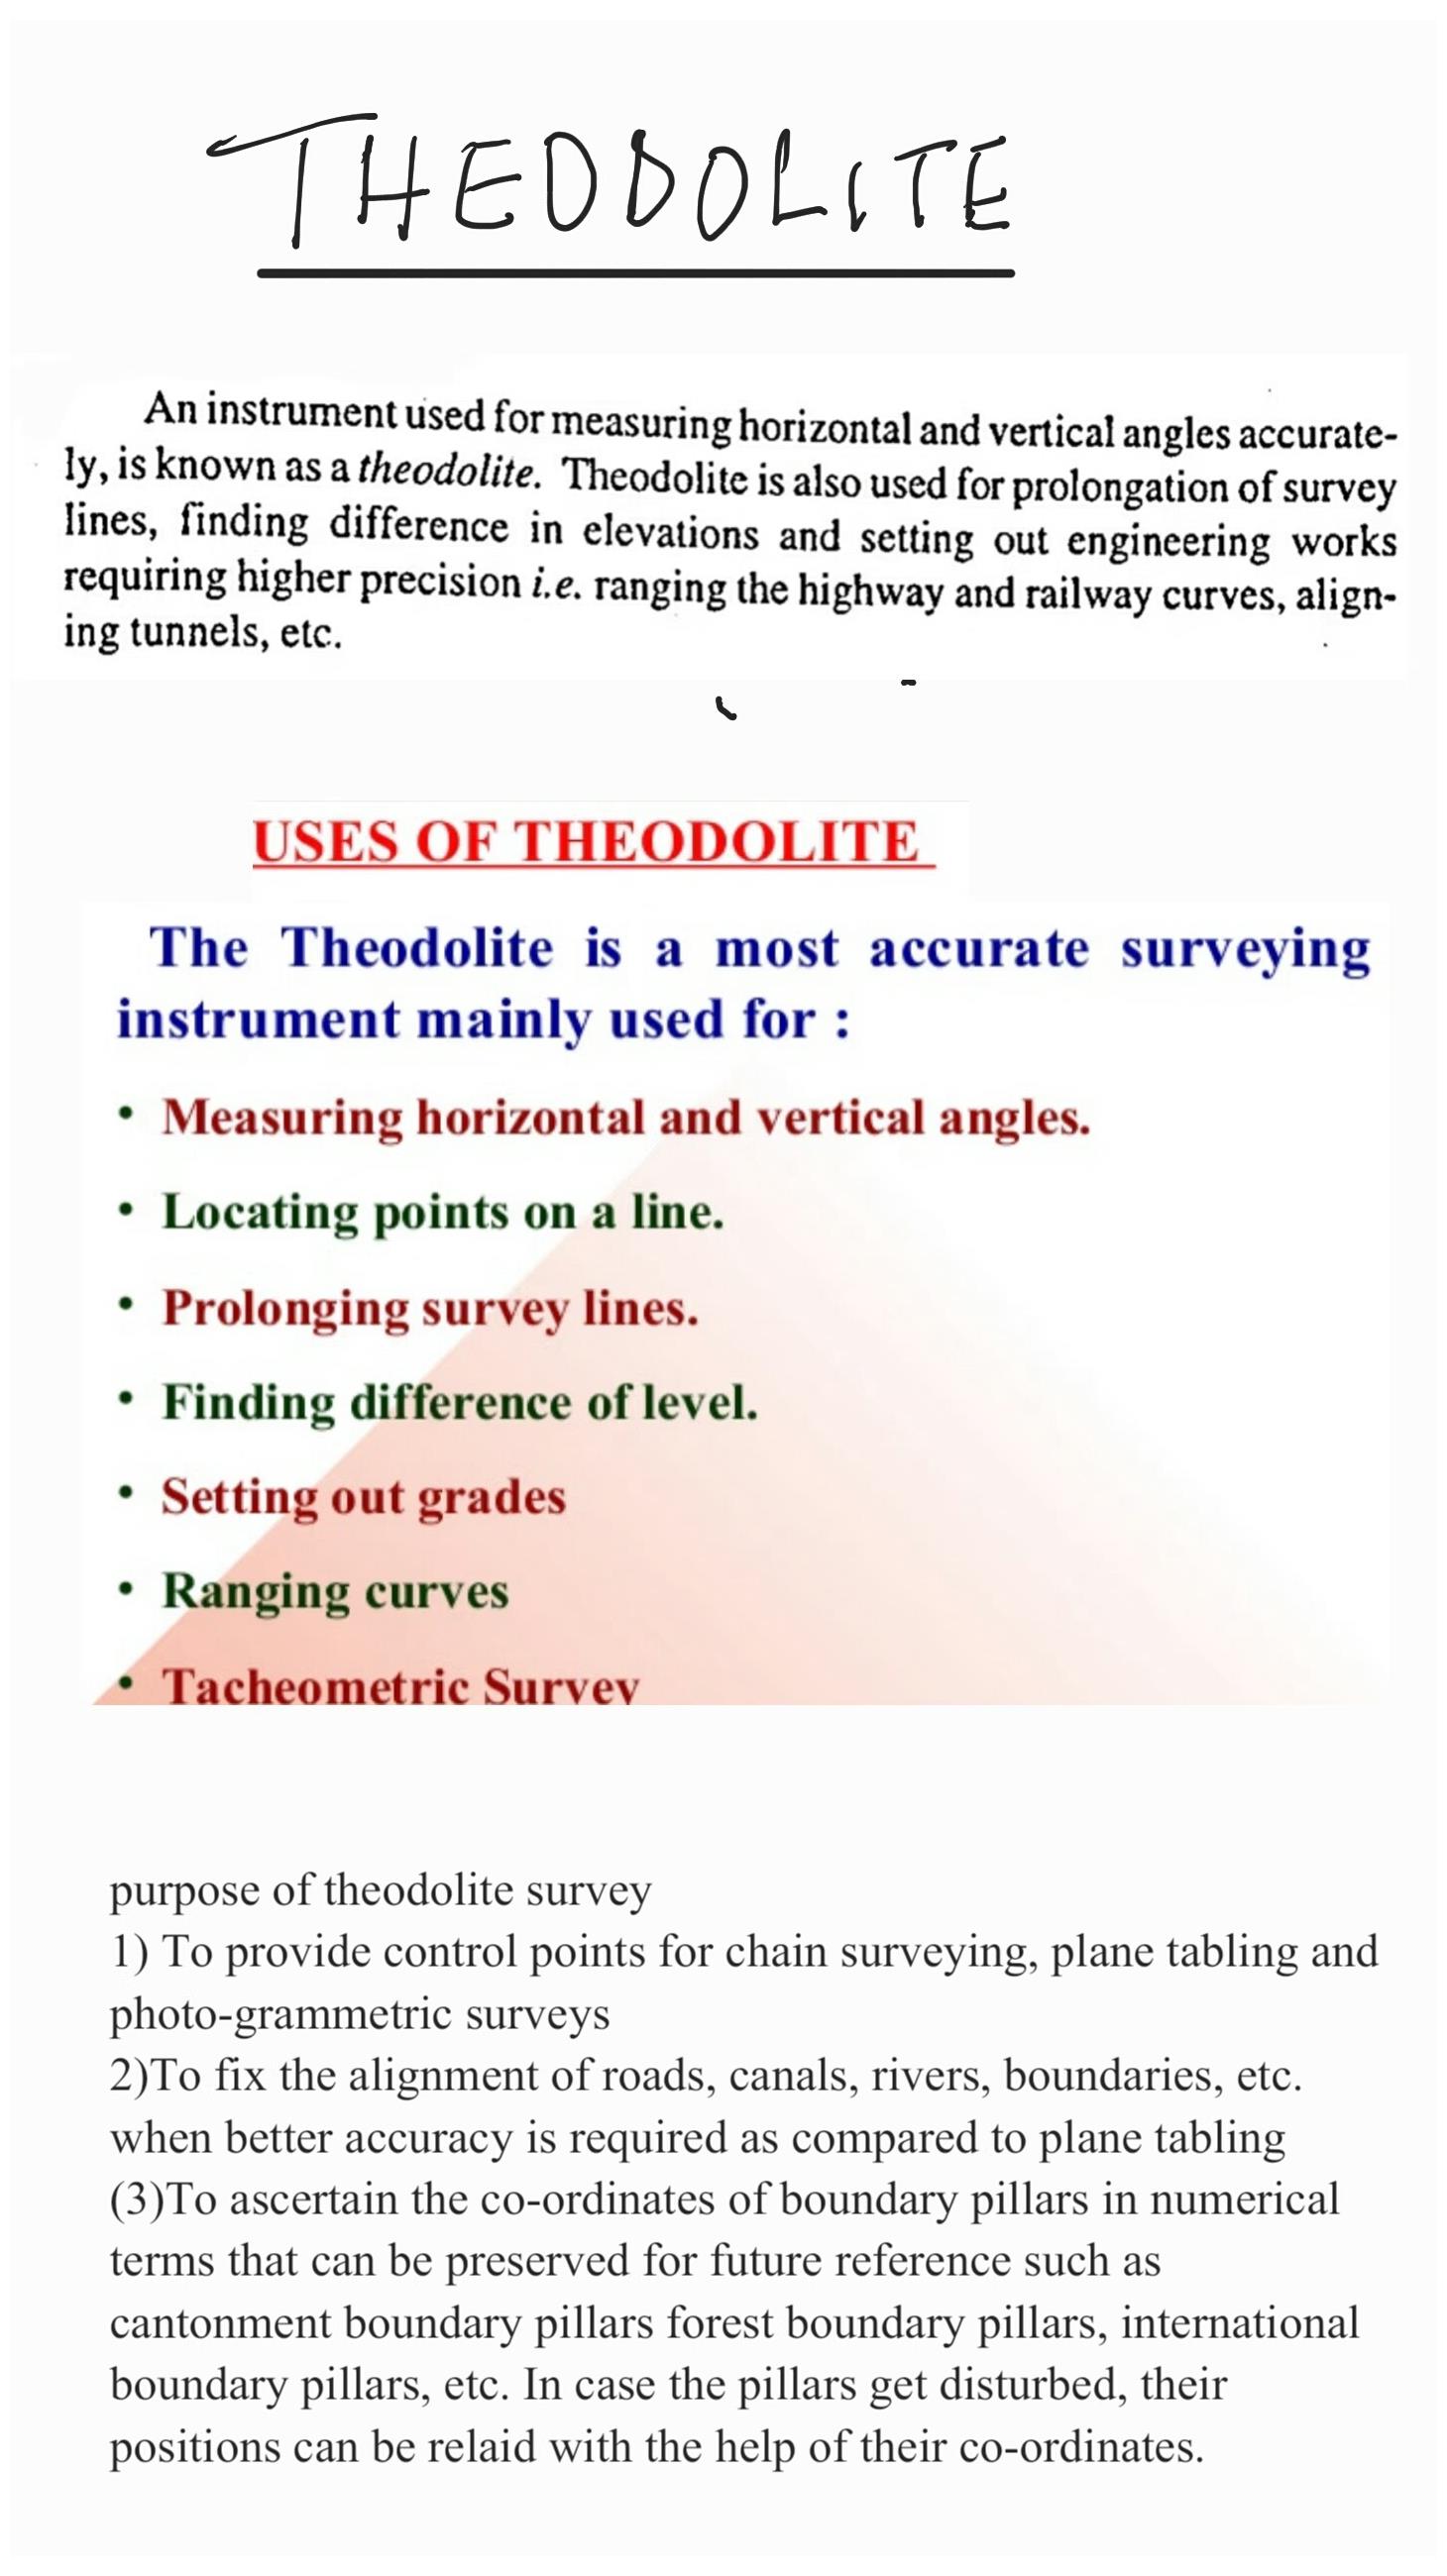 Diploma-in-Quantity-Surveying-Theodolite-Notes_13622_0.jpg